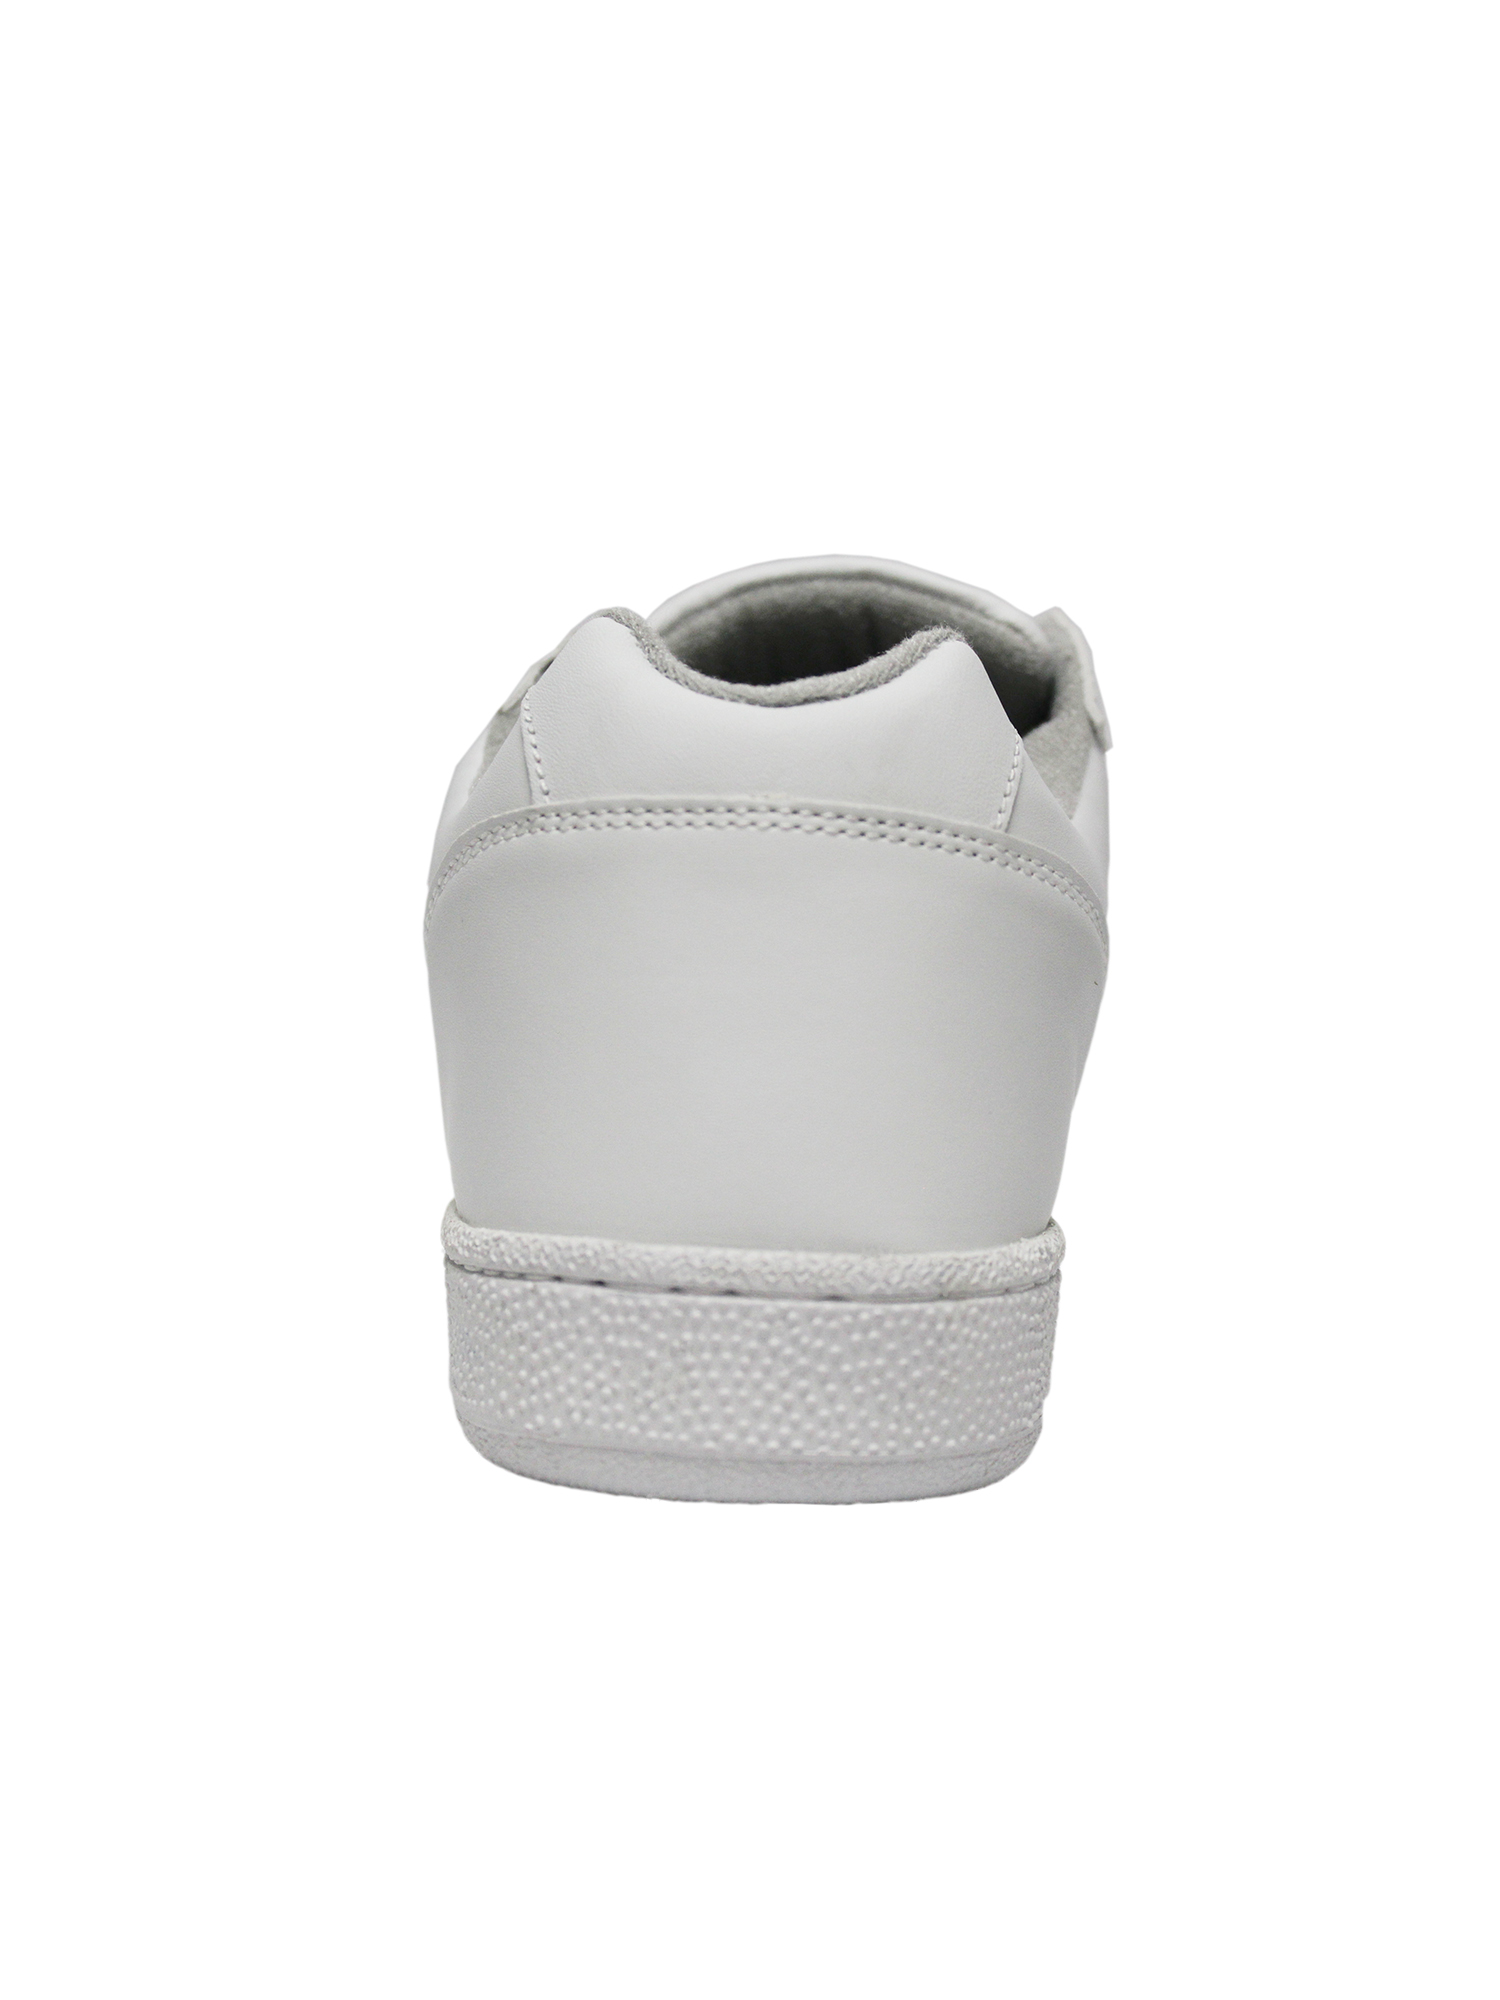 Tanleewa Men's Leather Strap Sneakers Lightweight Hook and Loop Walking Shoe Size 3 Adult Male - image 5 of 5